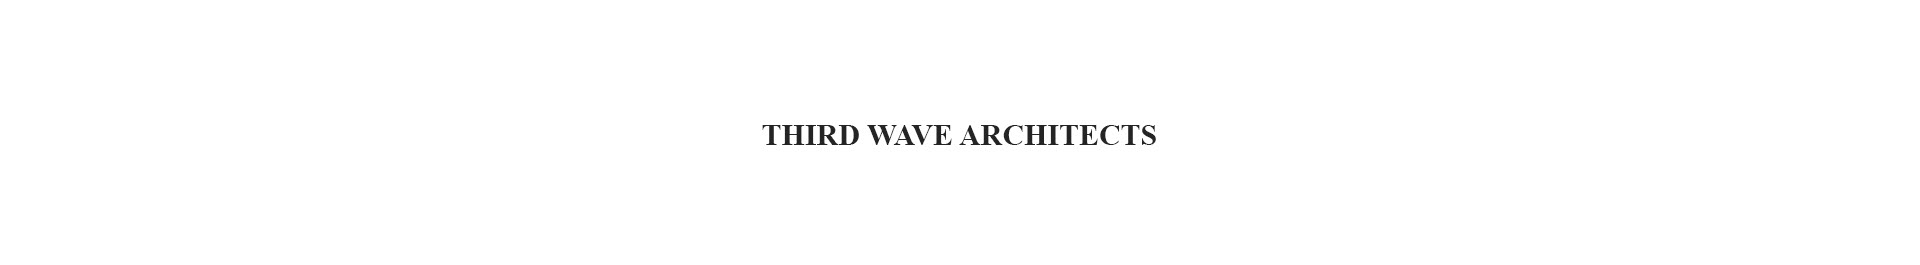 Third Wave Architects profil başlığı